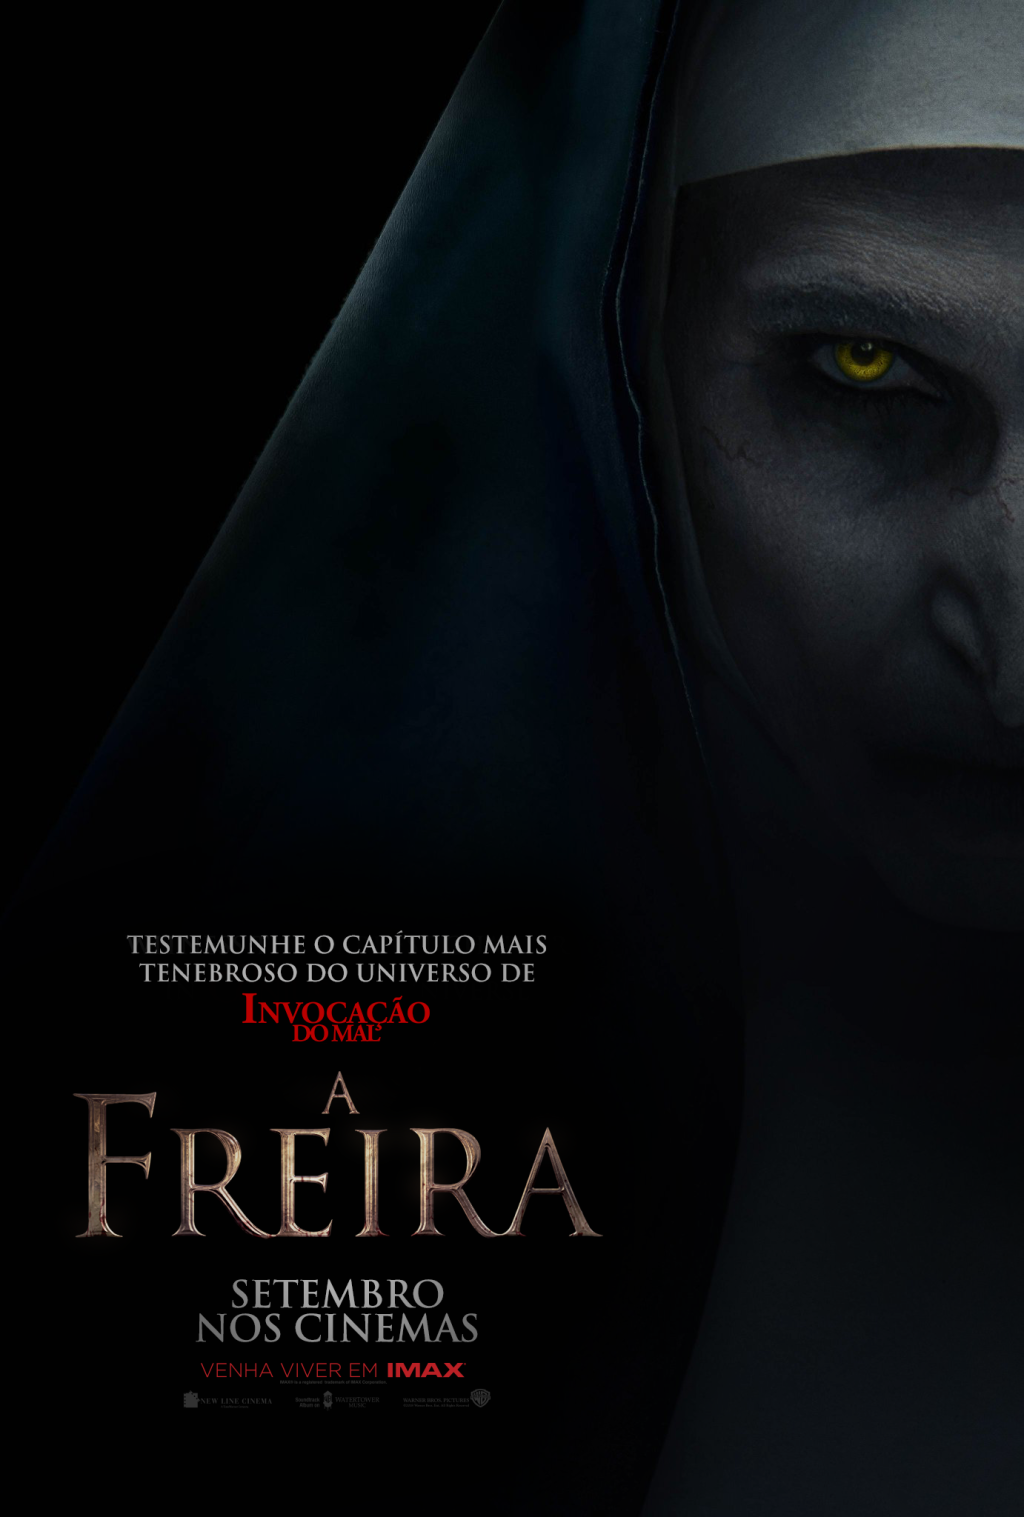 A Freira - Poster Teaser